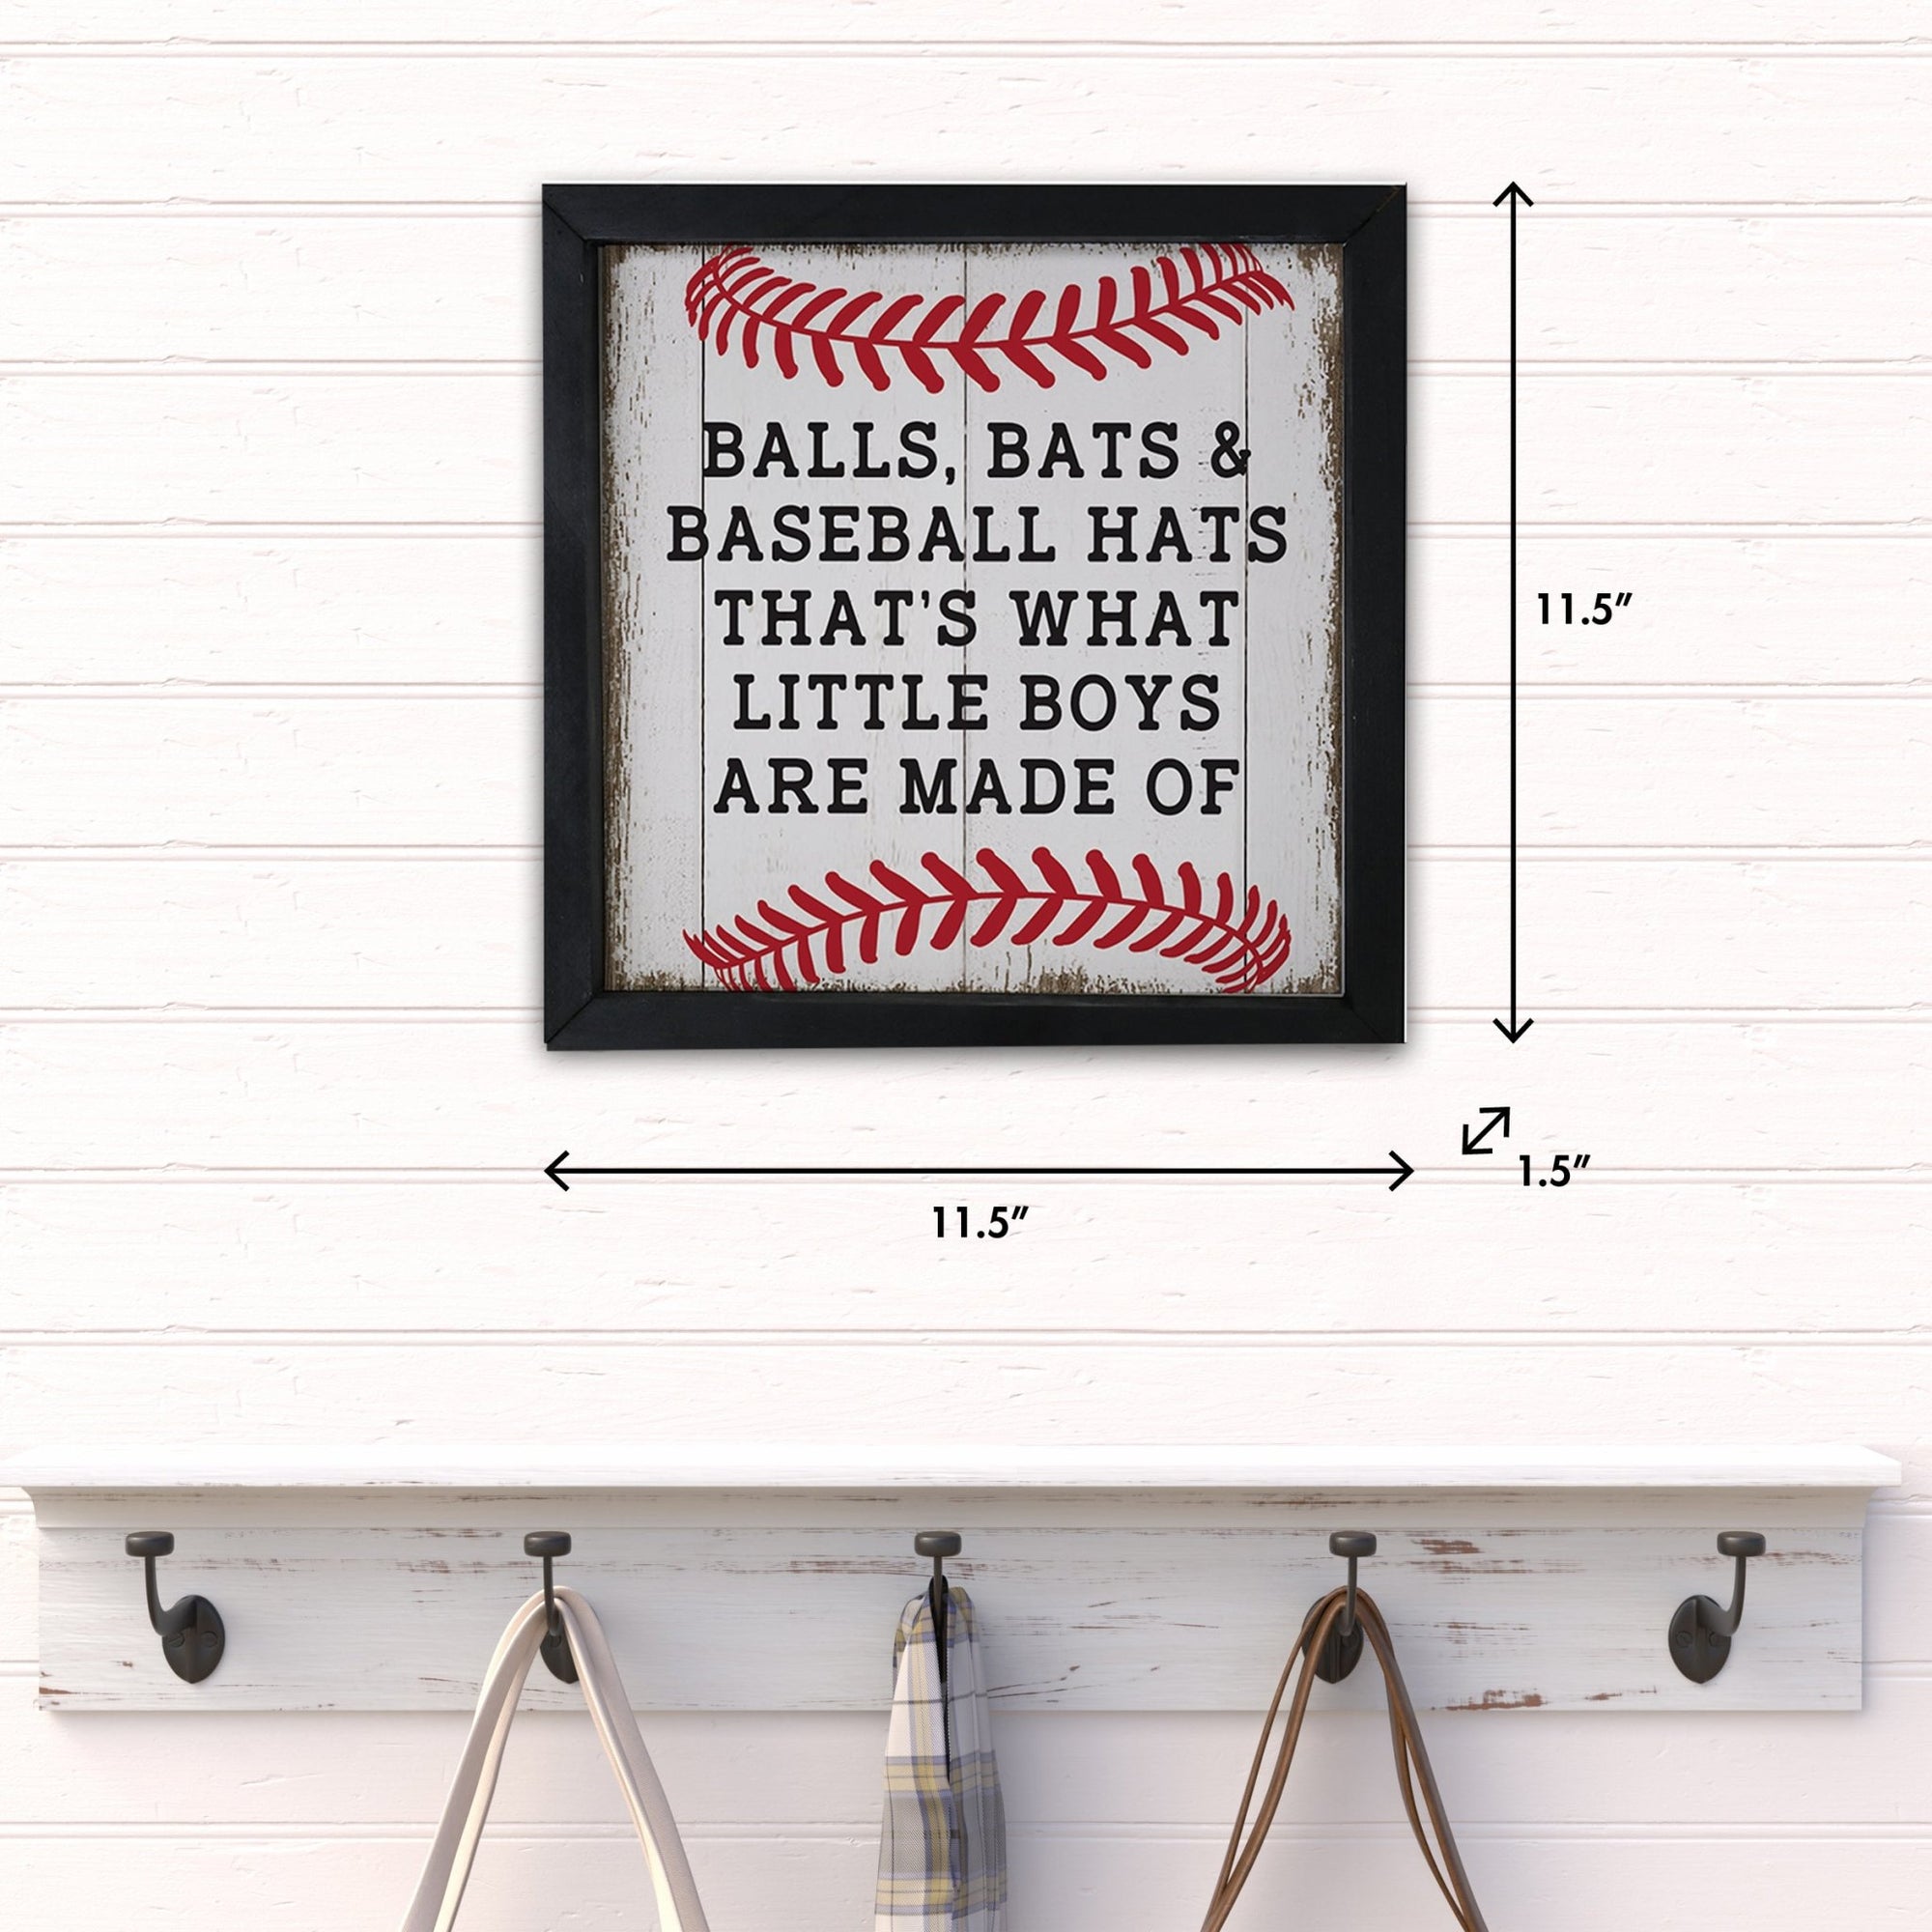 Elegant Baseball Framed Shadow Box Shelf Décor With Inspiring Bible Verses - Balls, Bats, & Baseball Hats - LifeSong Milestones